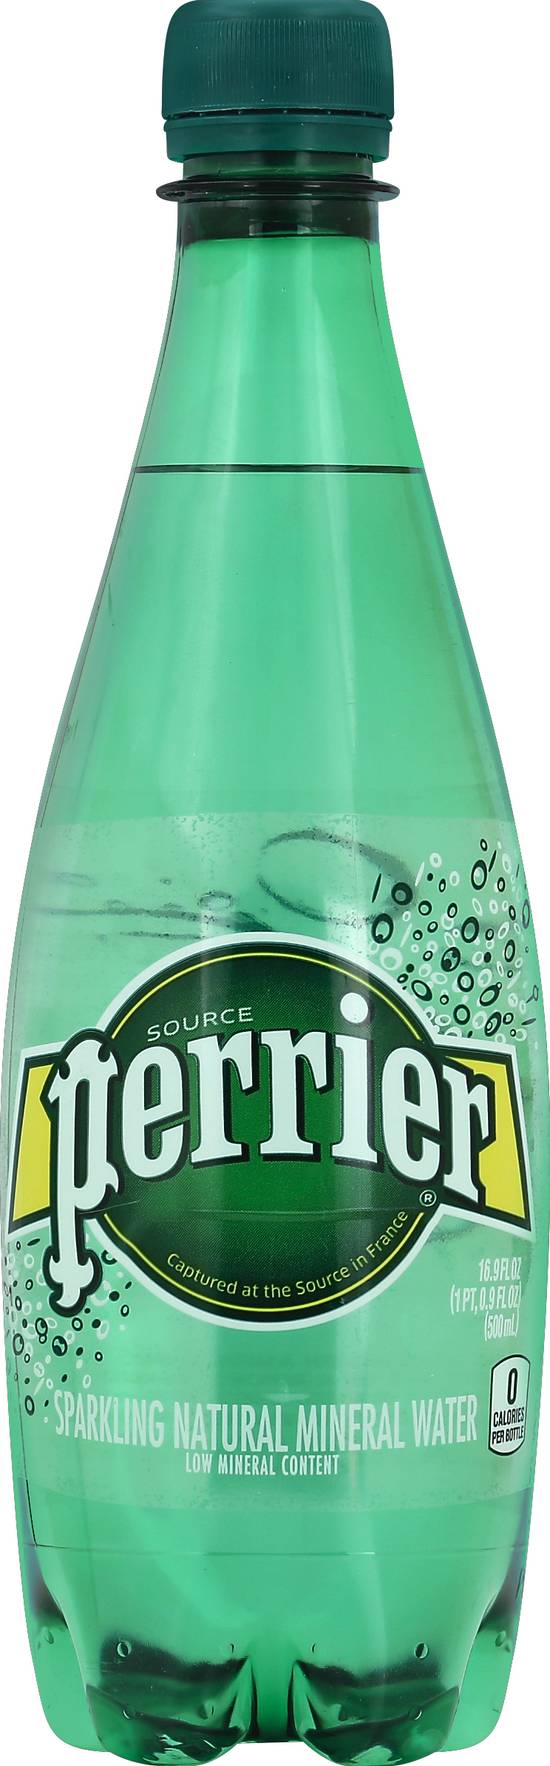 Perrier Natural Mineral Sparkling Water (16.89 fl oz)